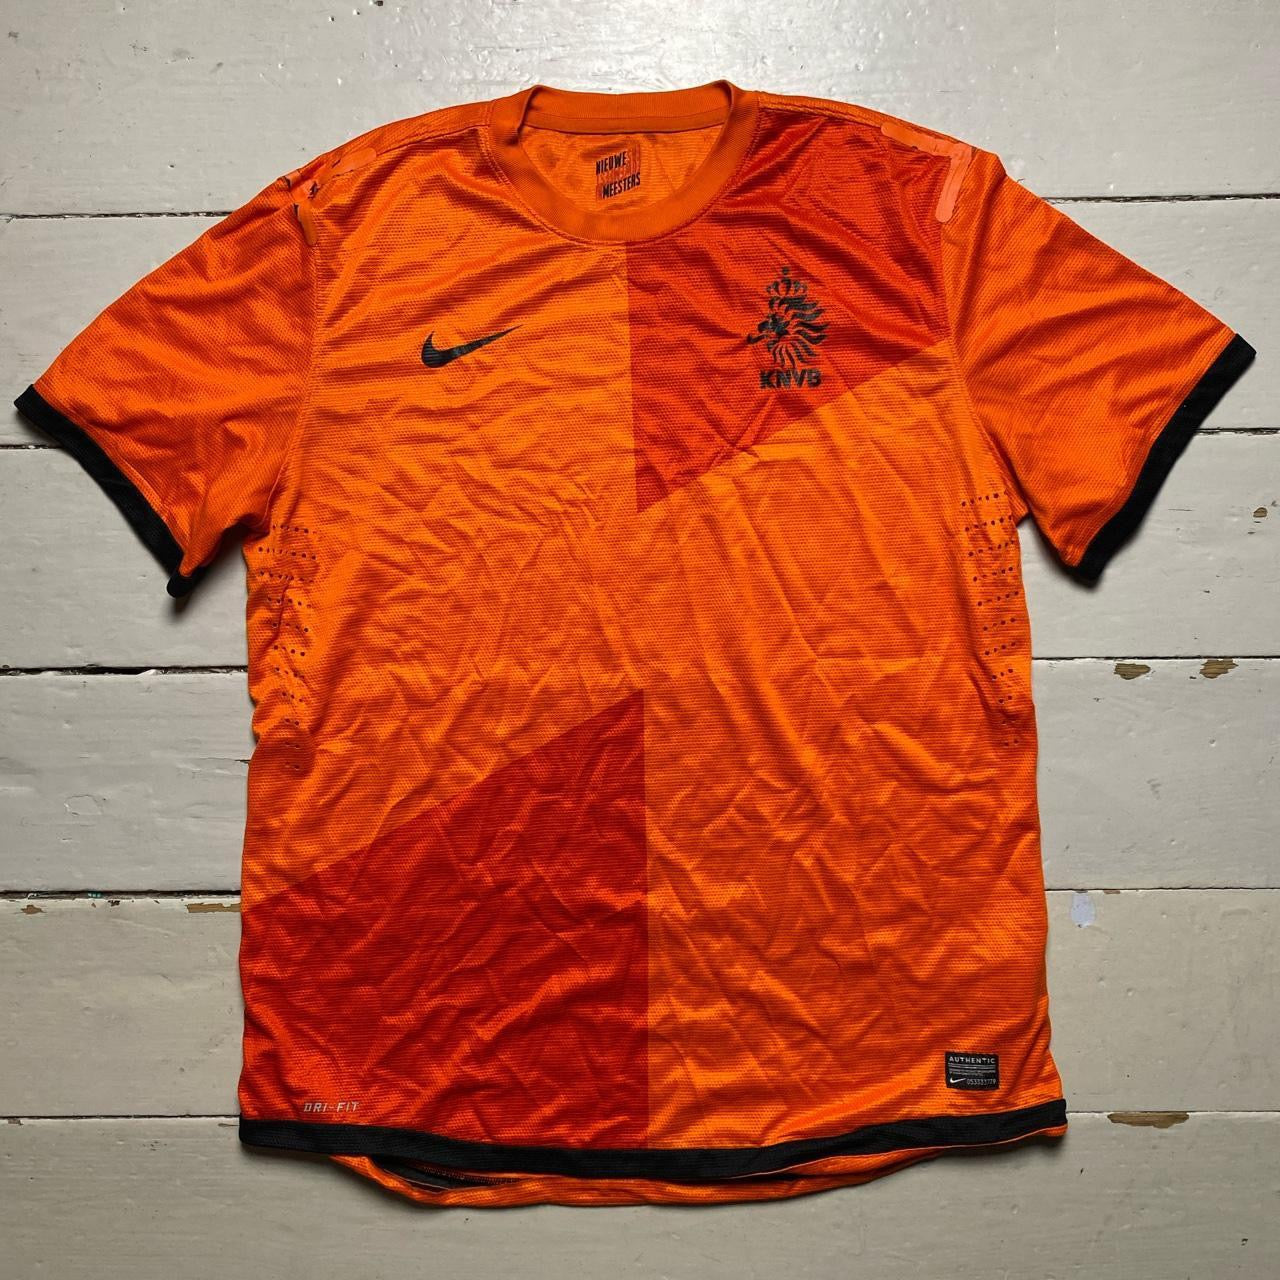 Holland Netherland Nike Football Jersey (XL)